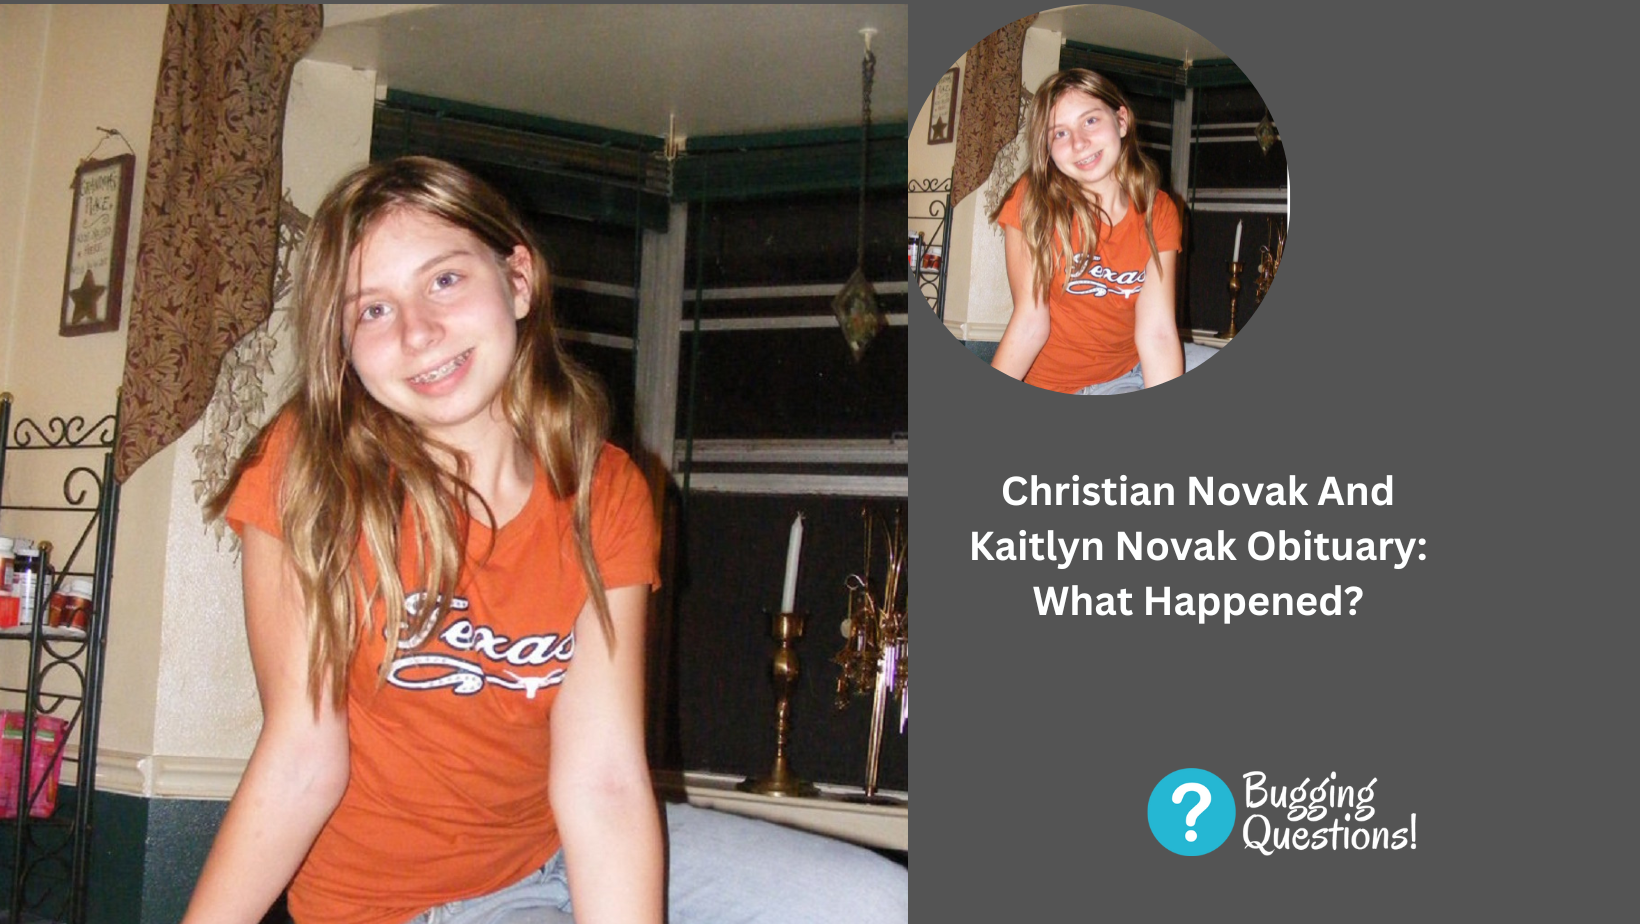 Christian Novak And Kaitlyn Novak Obituary: What Happened?